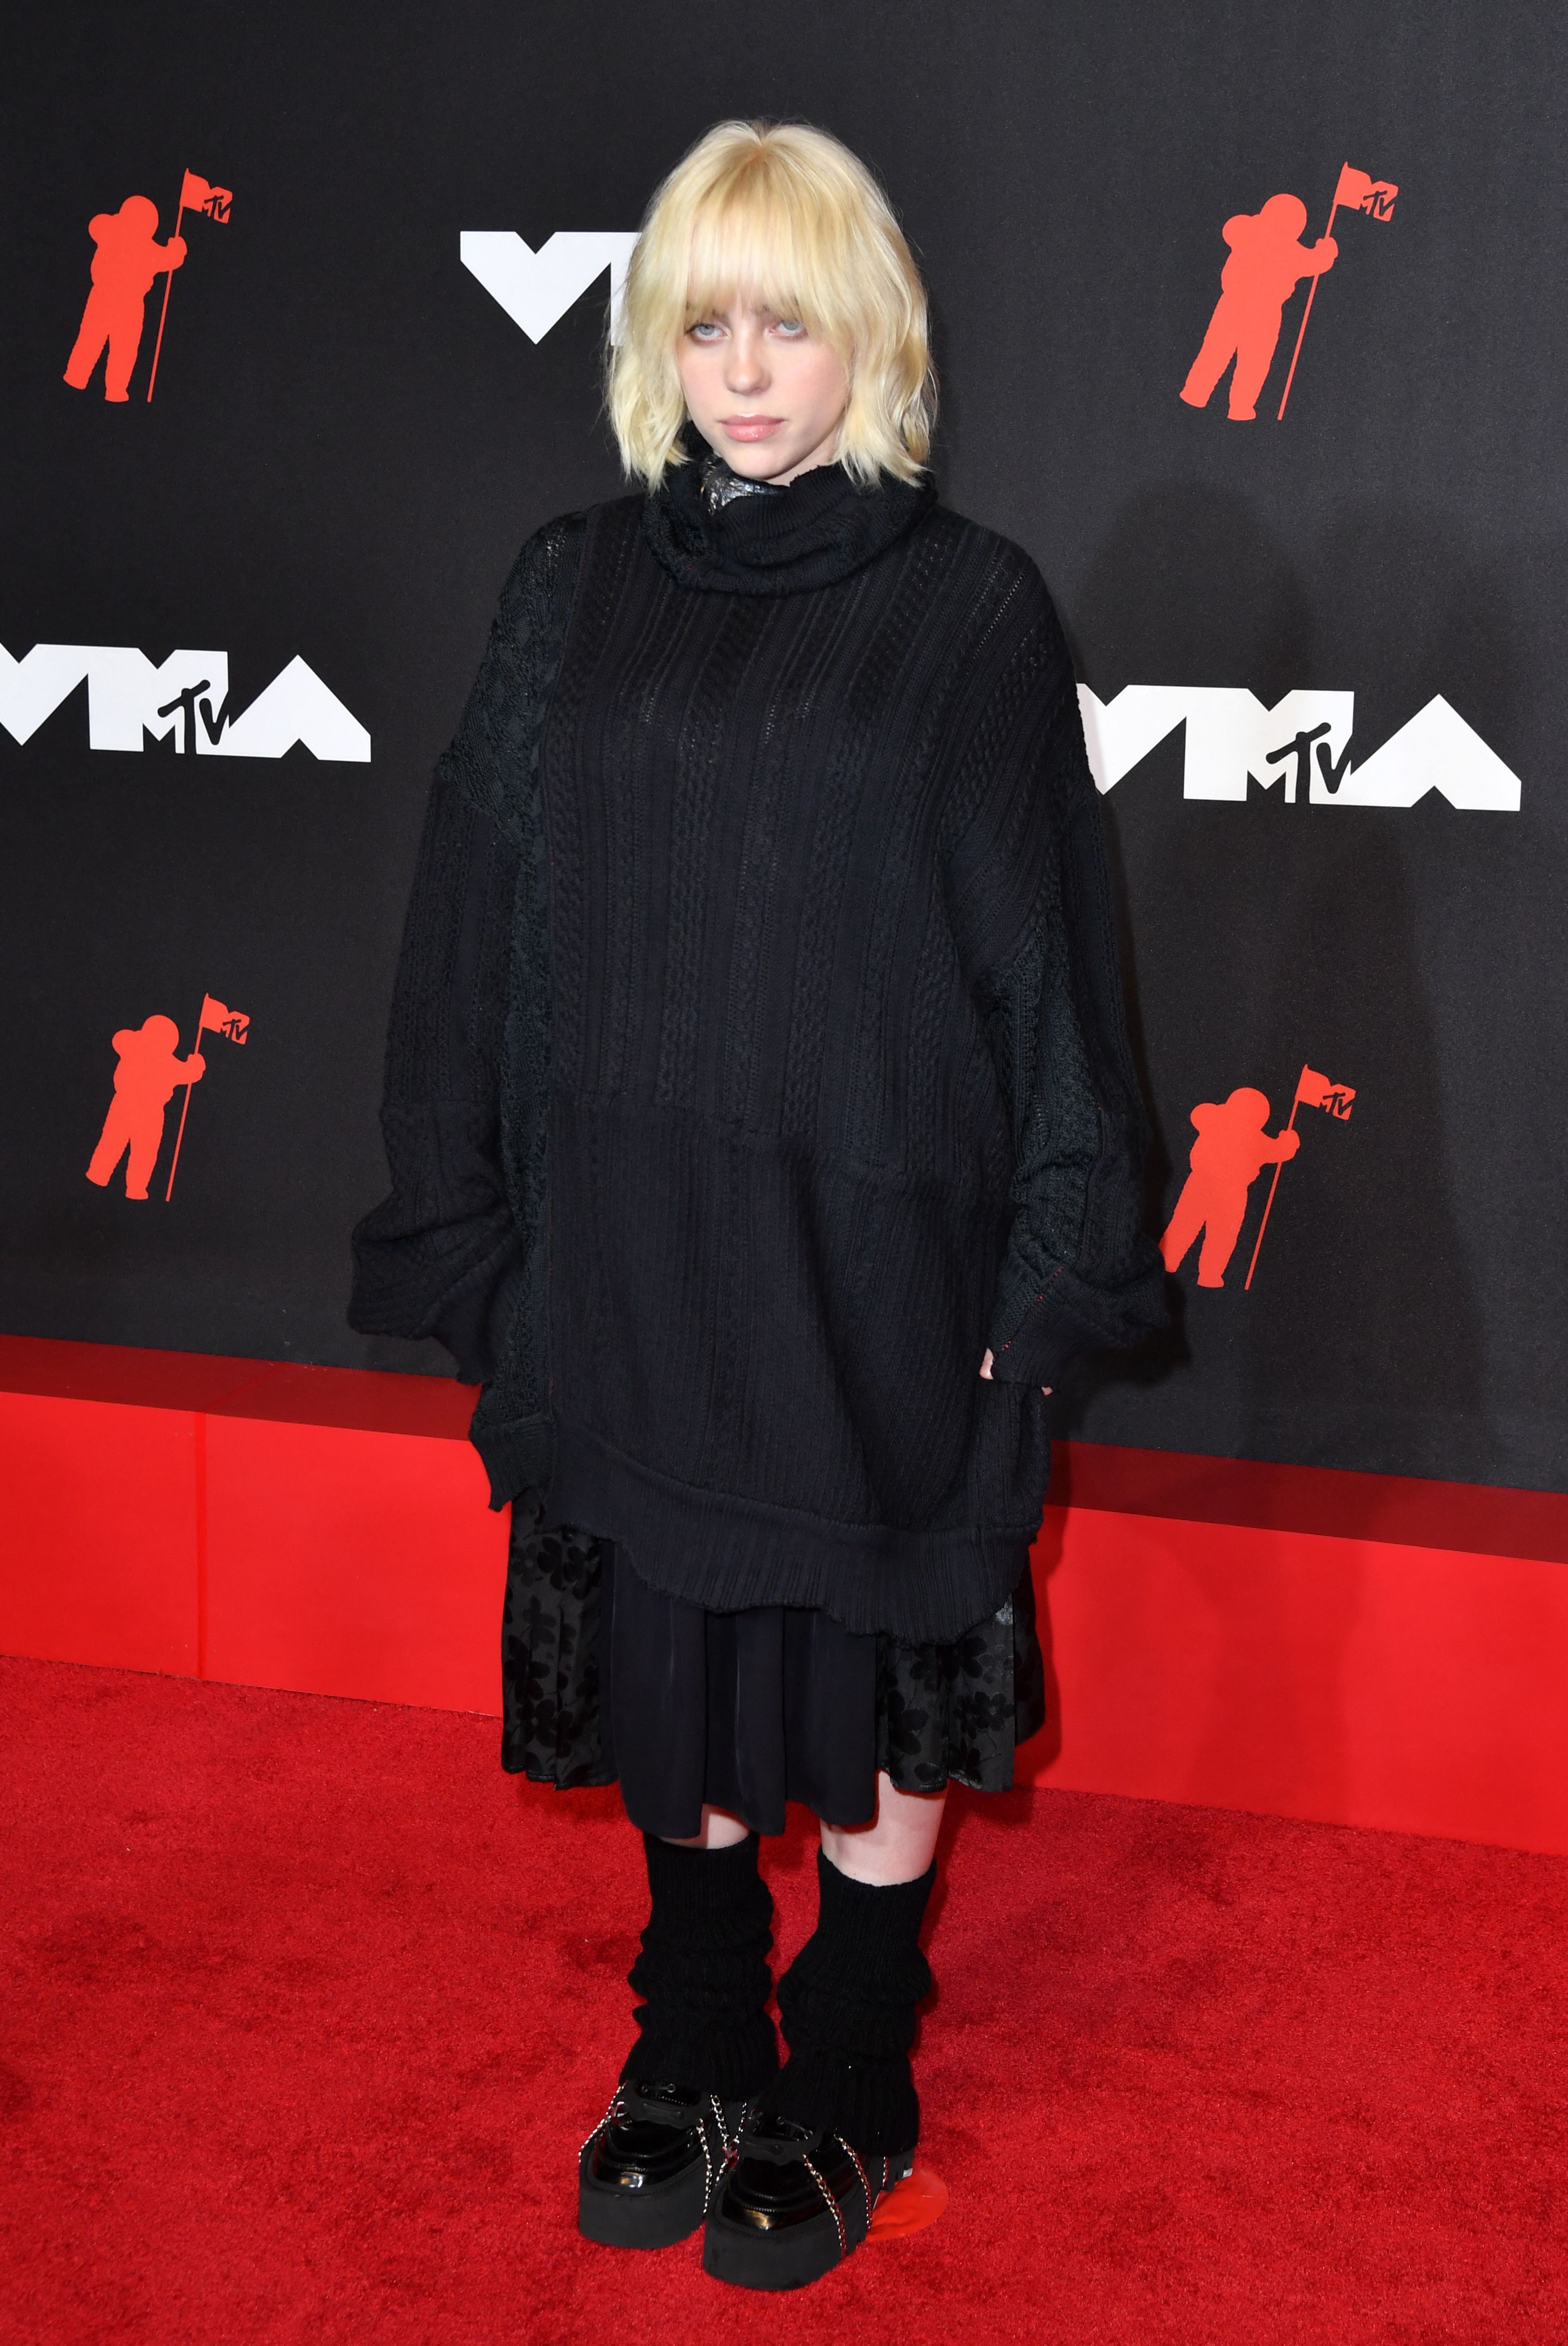 Billie Eilish Wears a Black Dress to the MTV VMAs in 2021